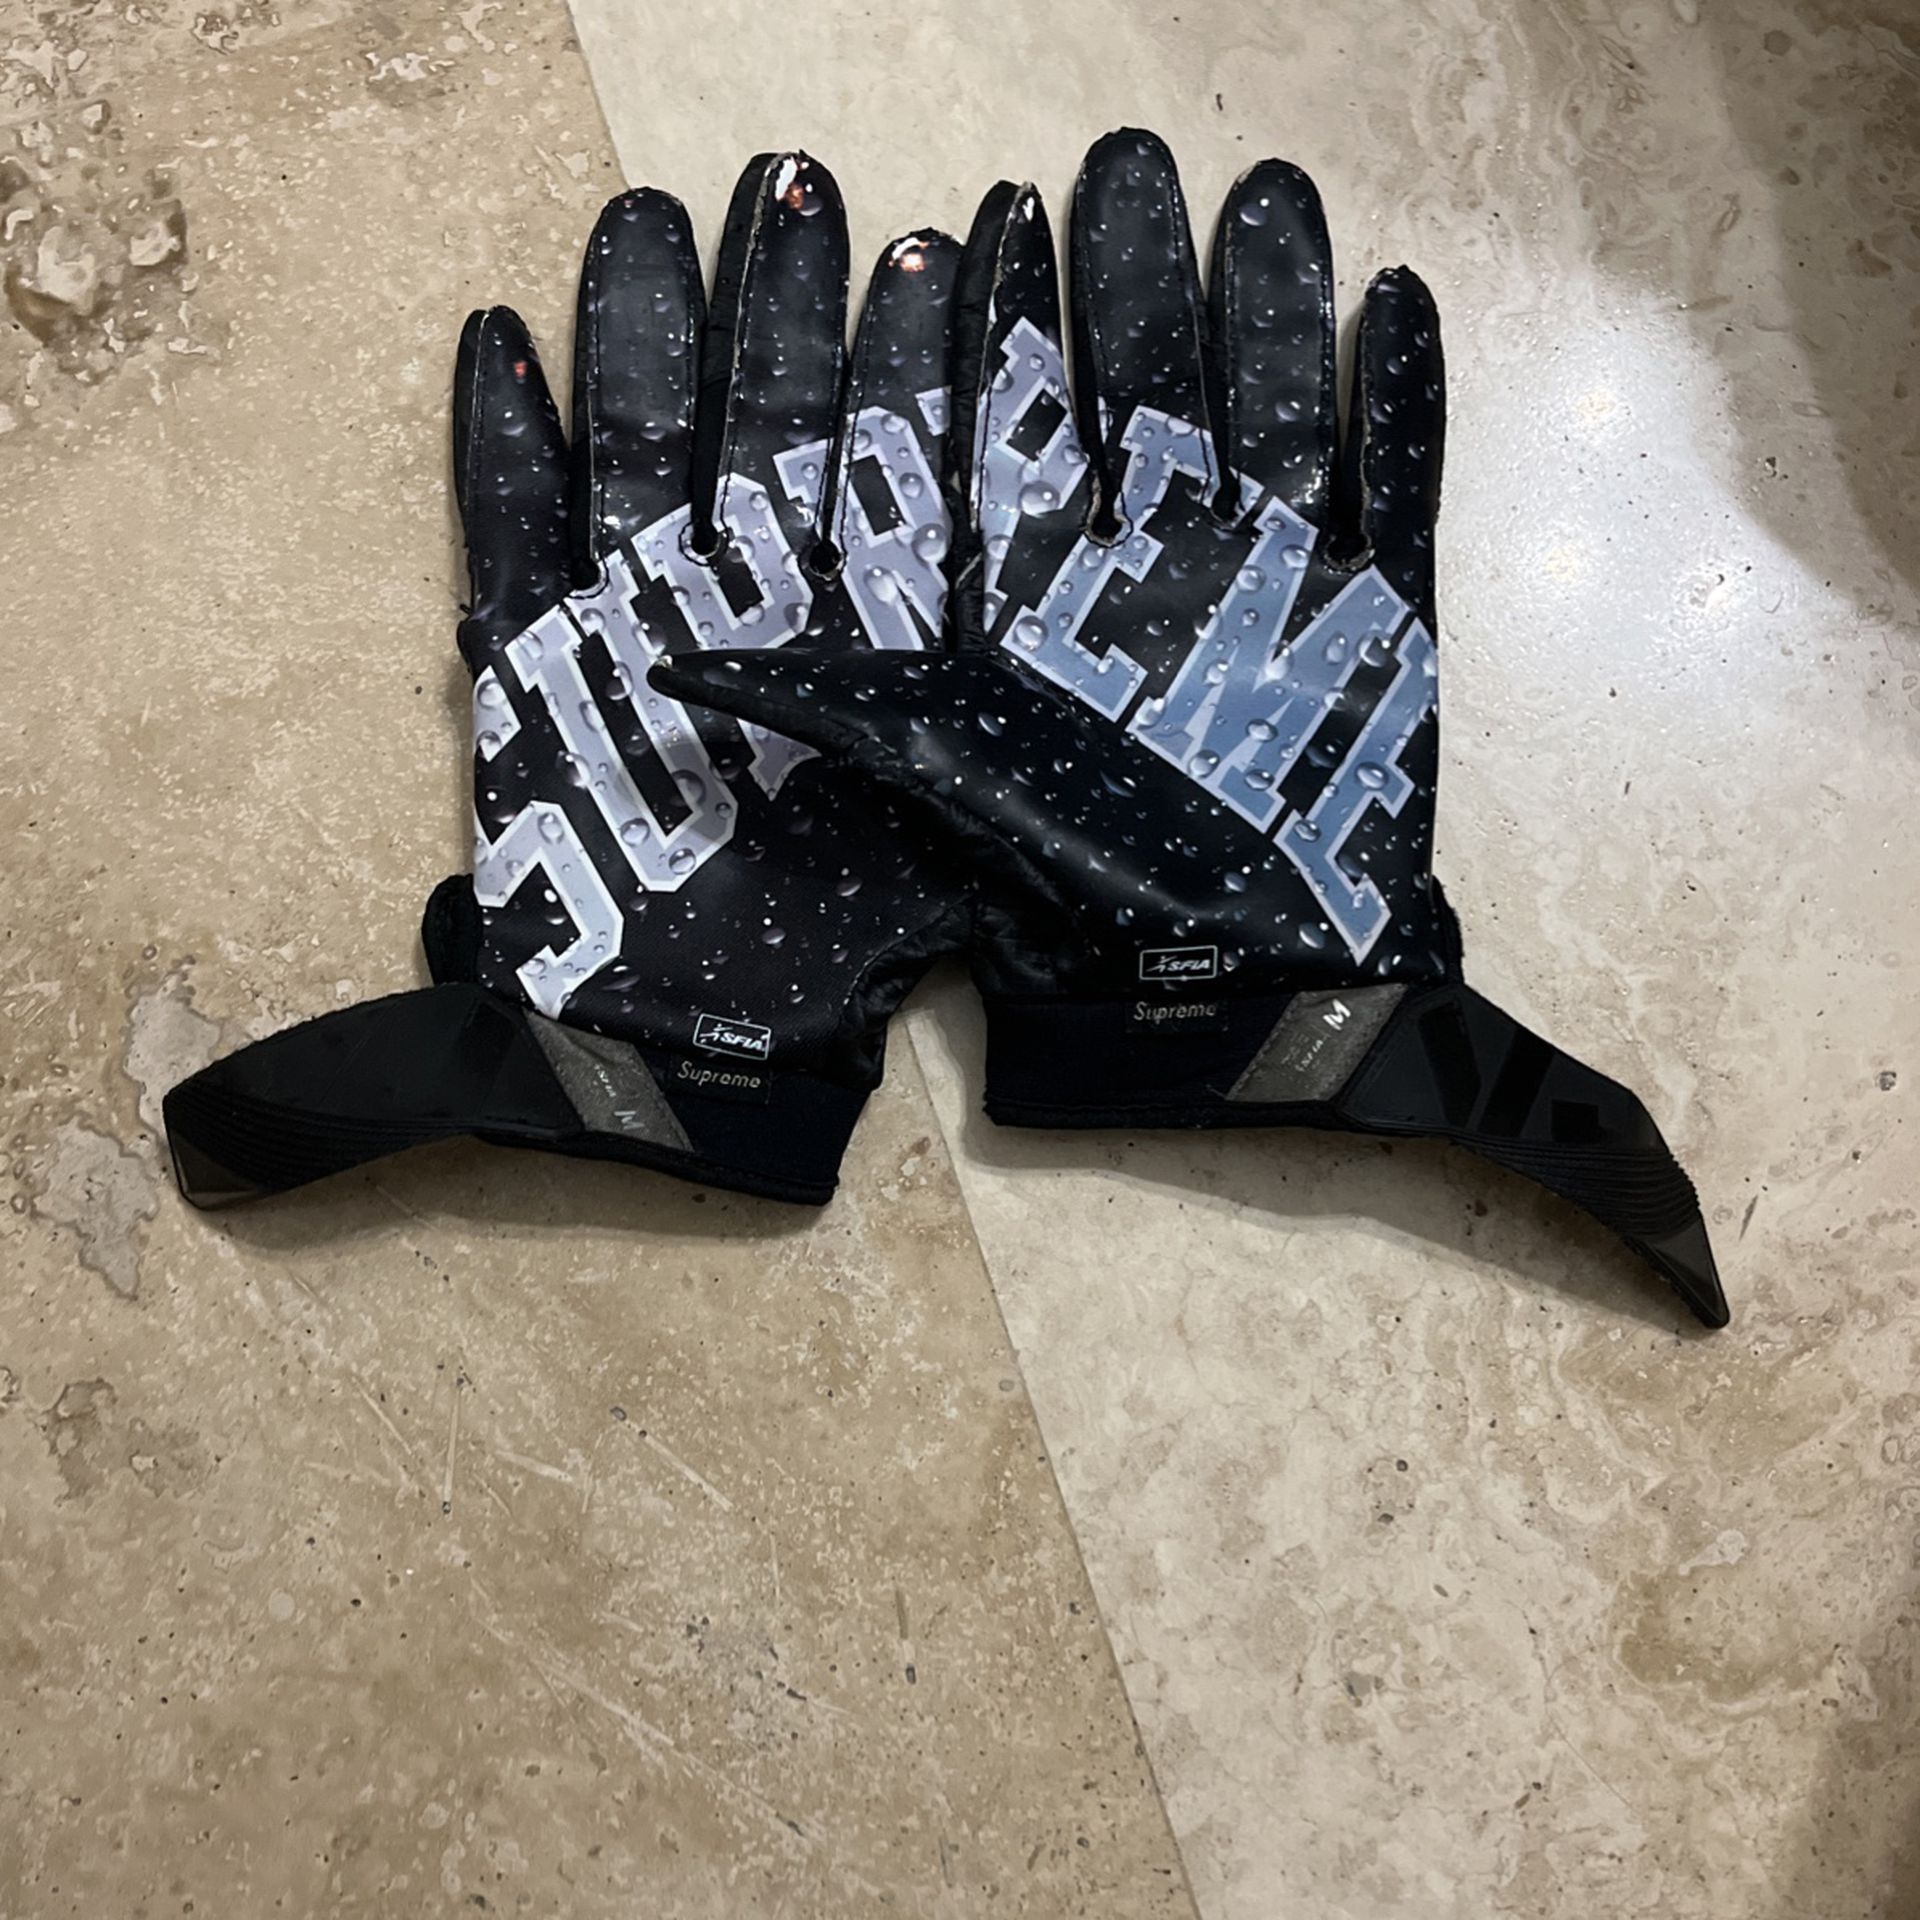 Size Medium Supreme Football Gloves for Sale in Miami, FL - OfferUp